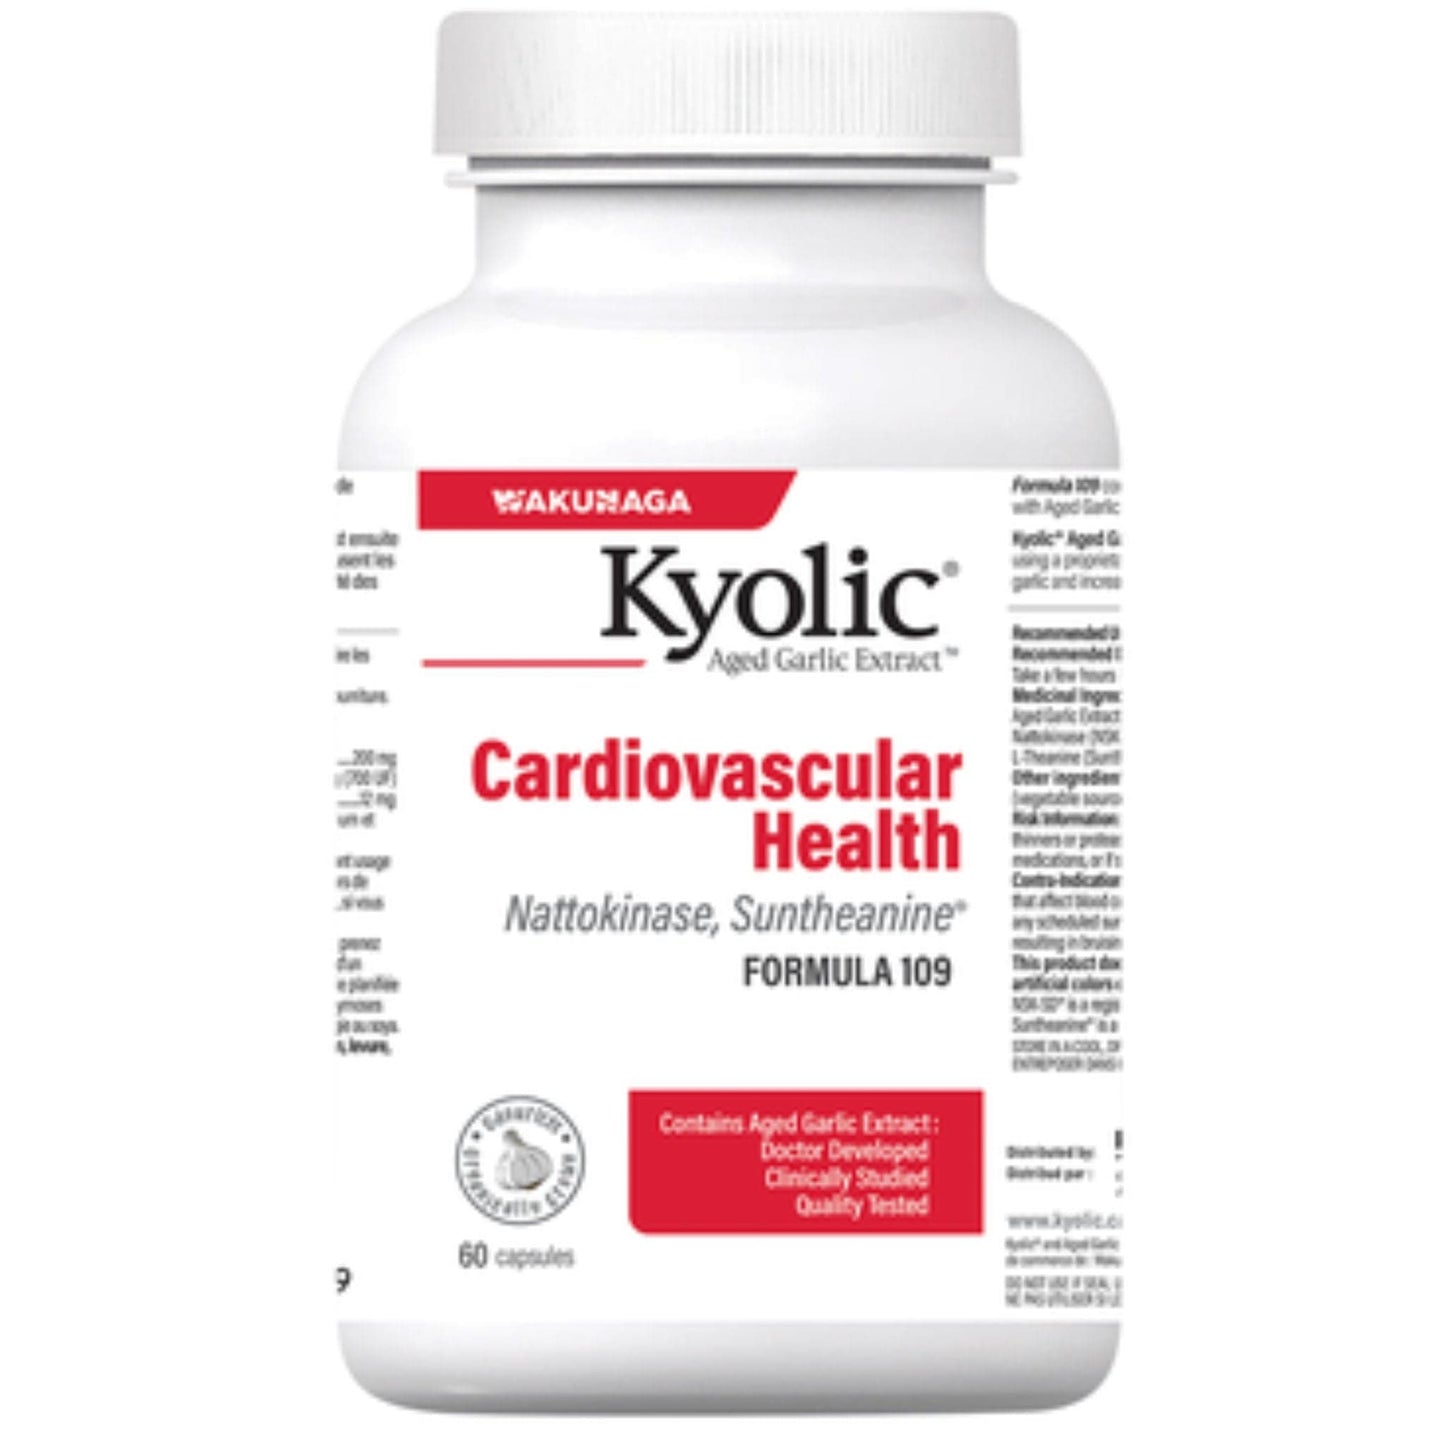 kyolic-cardiovascular-health-109-60-capsules_1